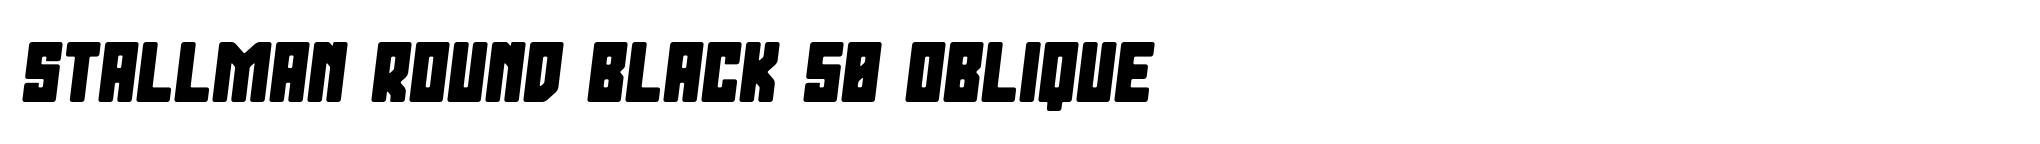 Stallman Round Black 50 Oblique image